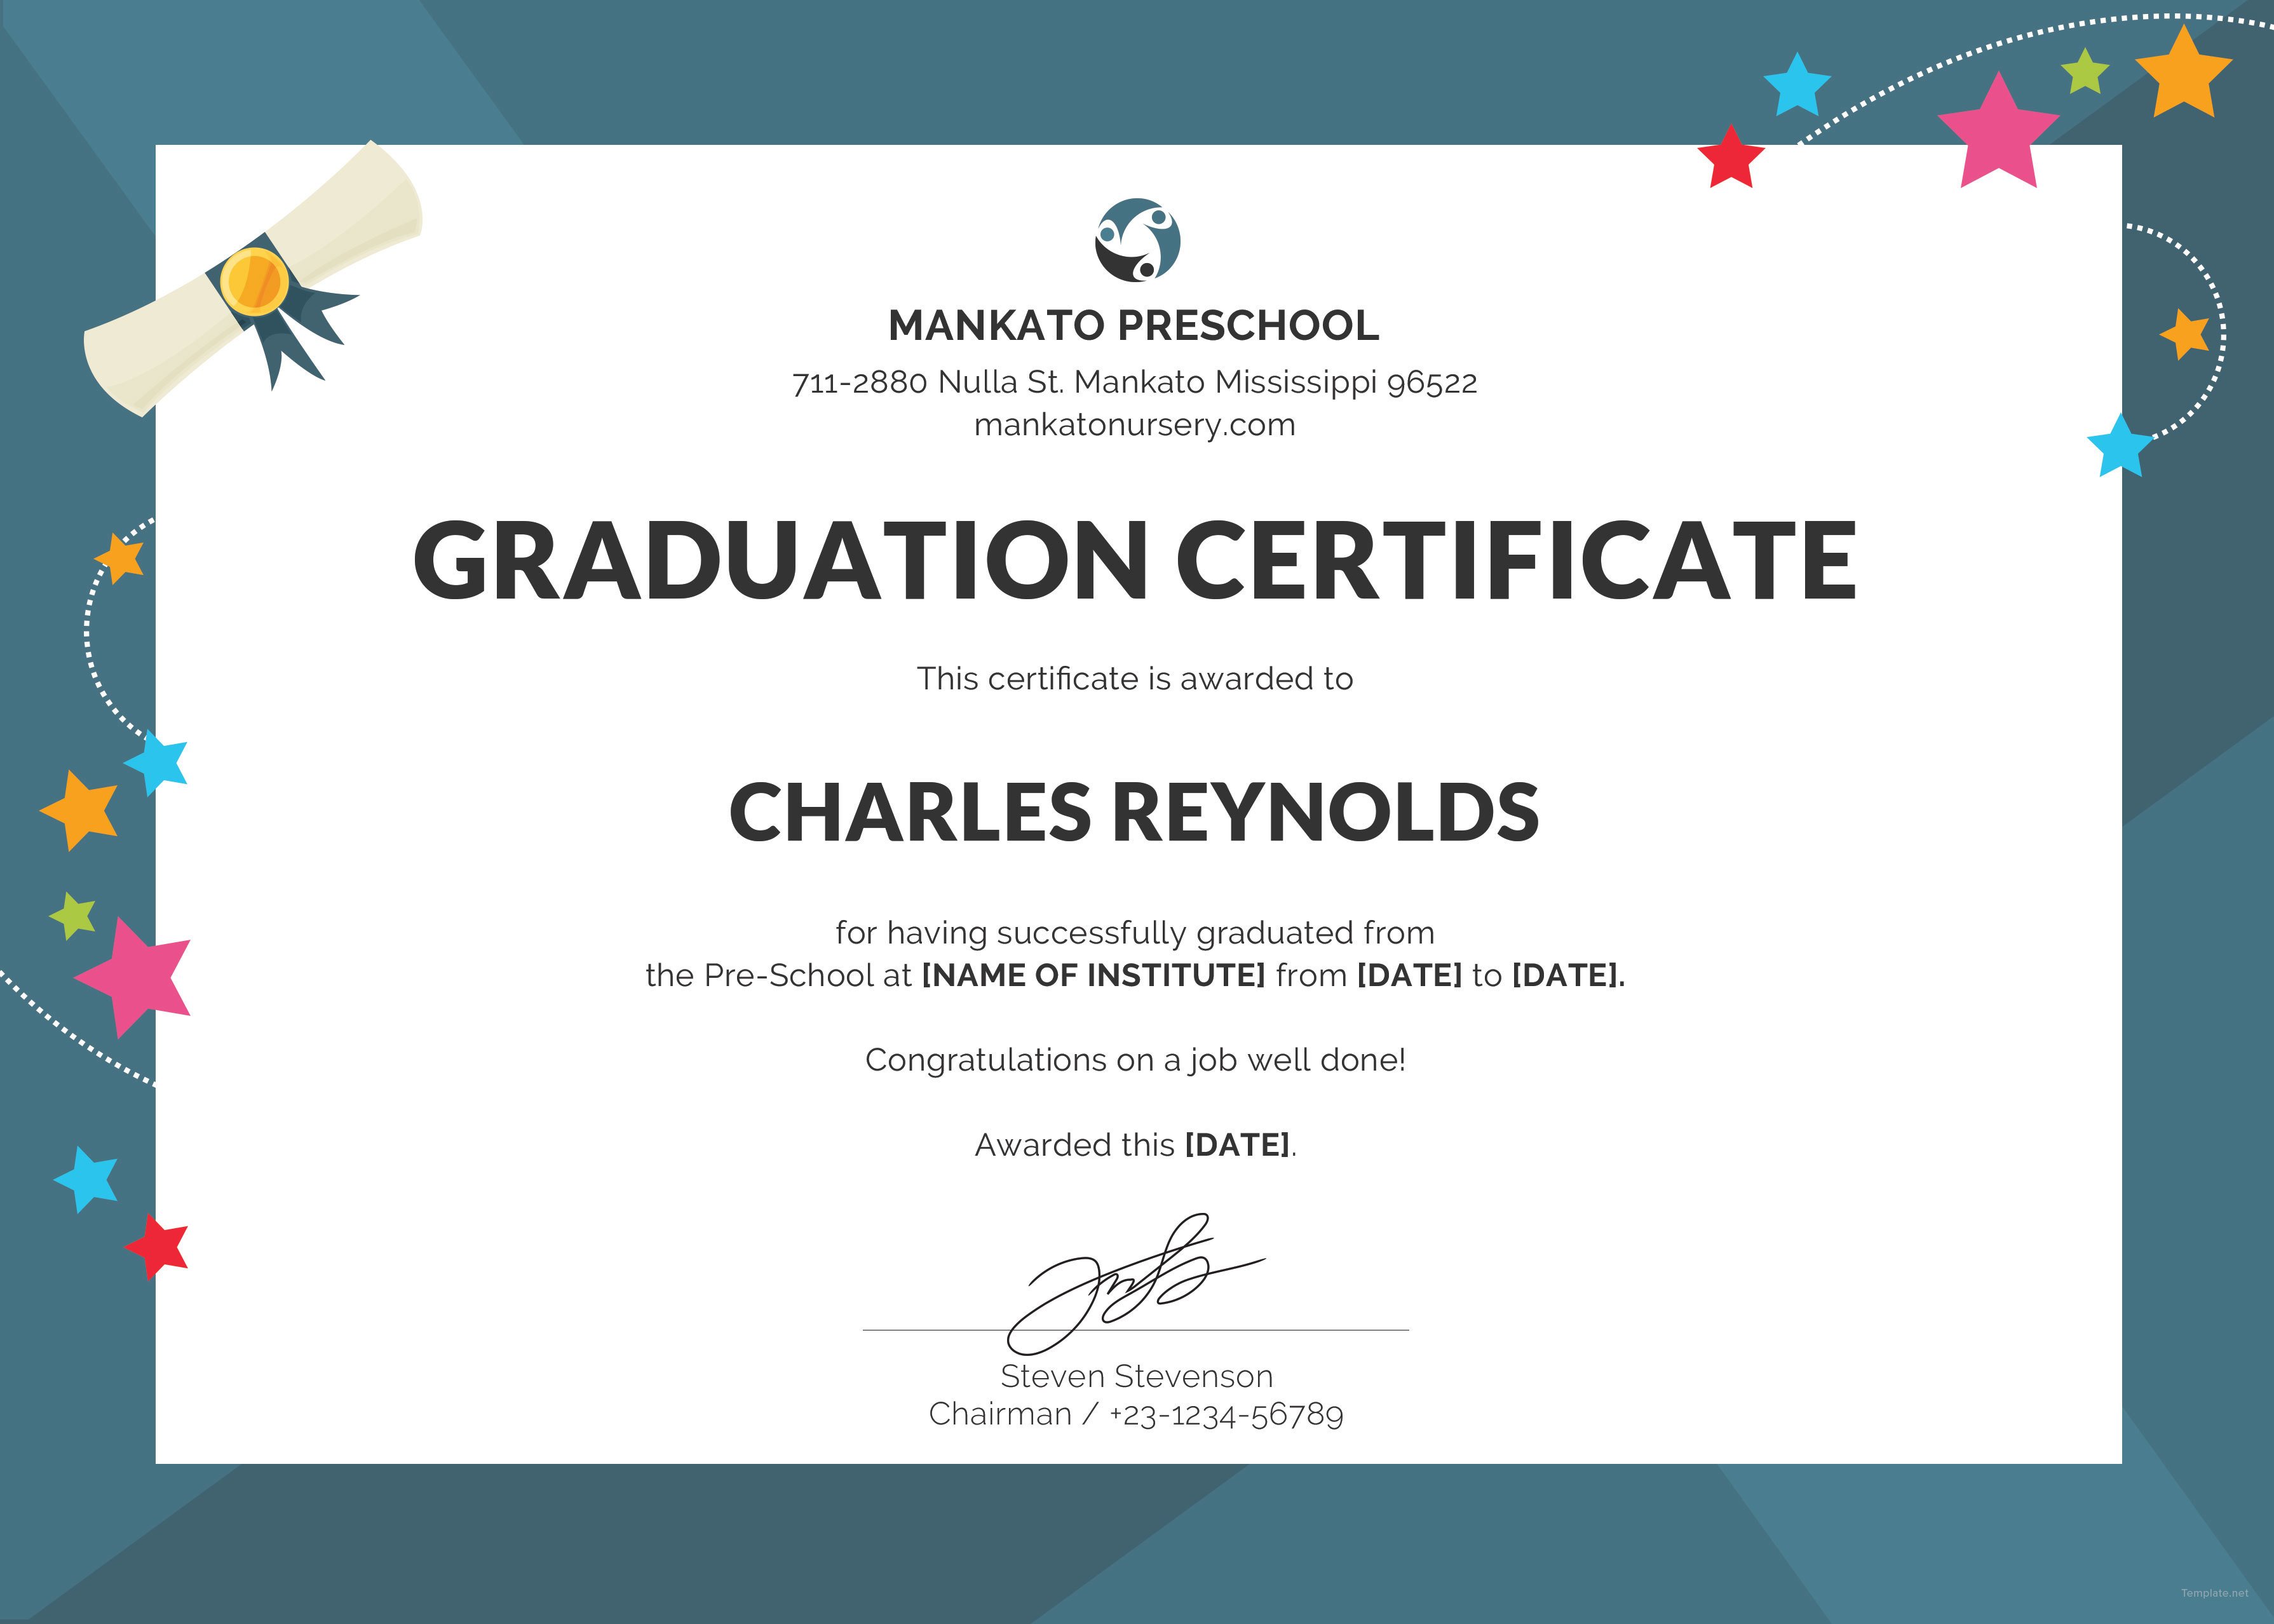 free-preschool-graduation-certificate-template-in-psd-ms-word-publisher-illustrator